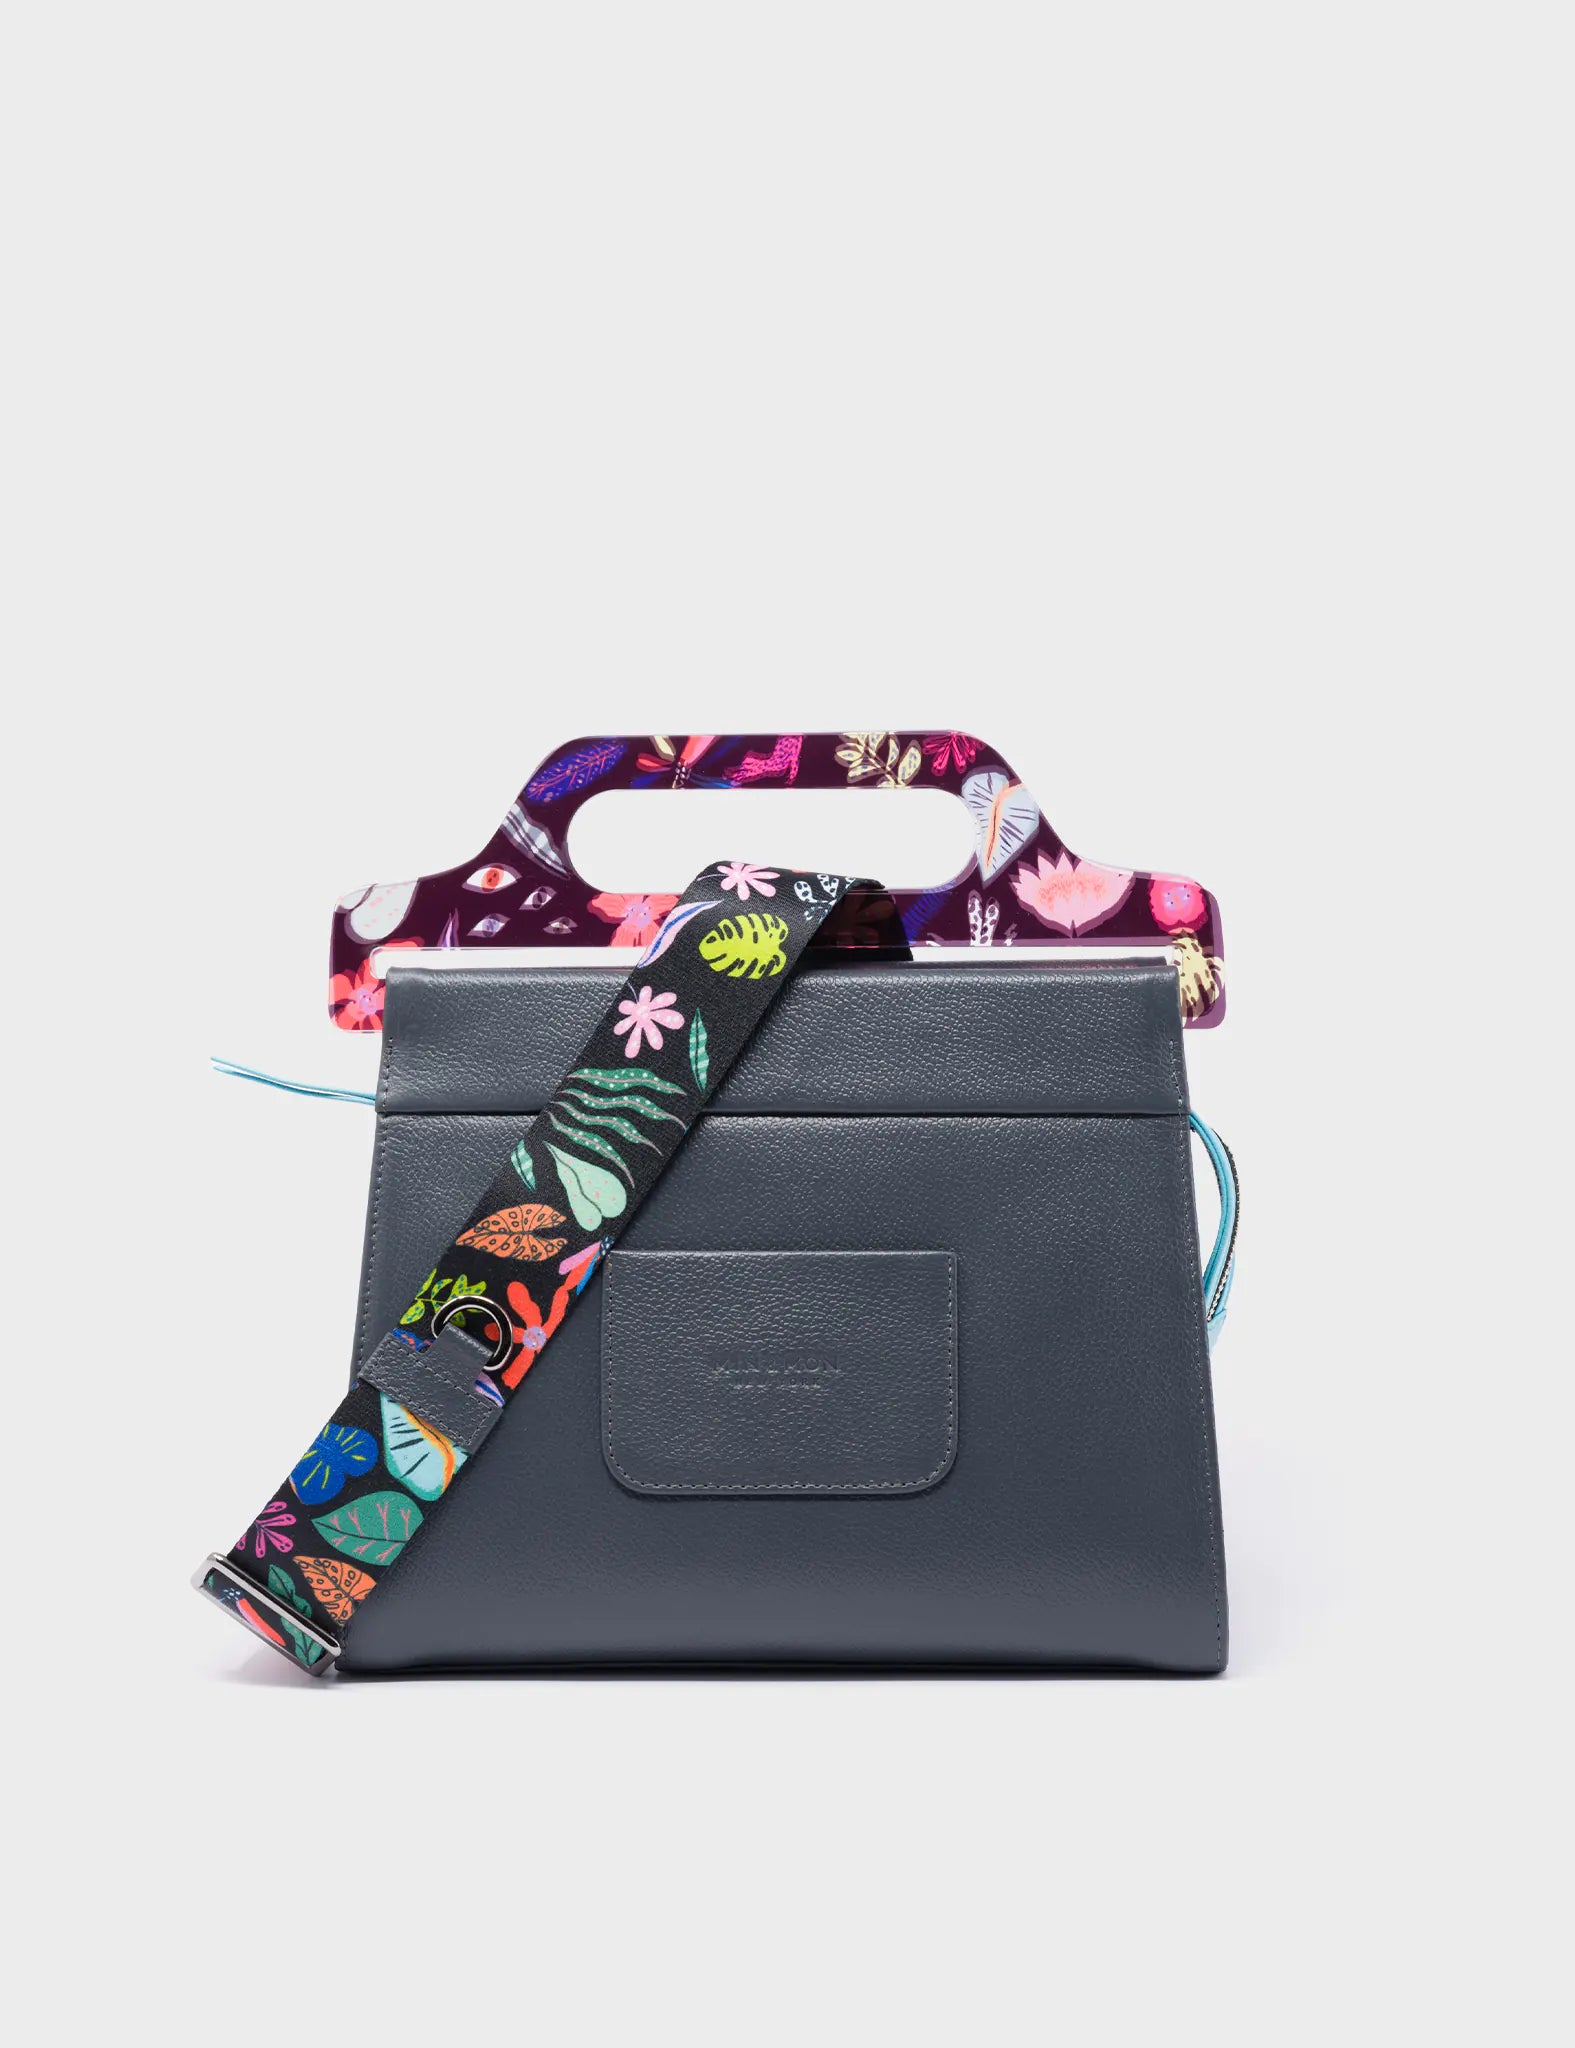 Vali Black Leather Crossbody Handbag Plastic Handle - Tiger and Flowers Design Back View